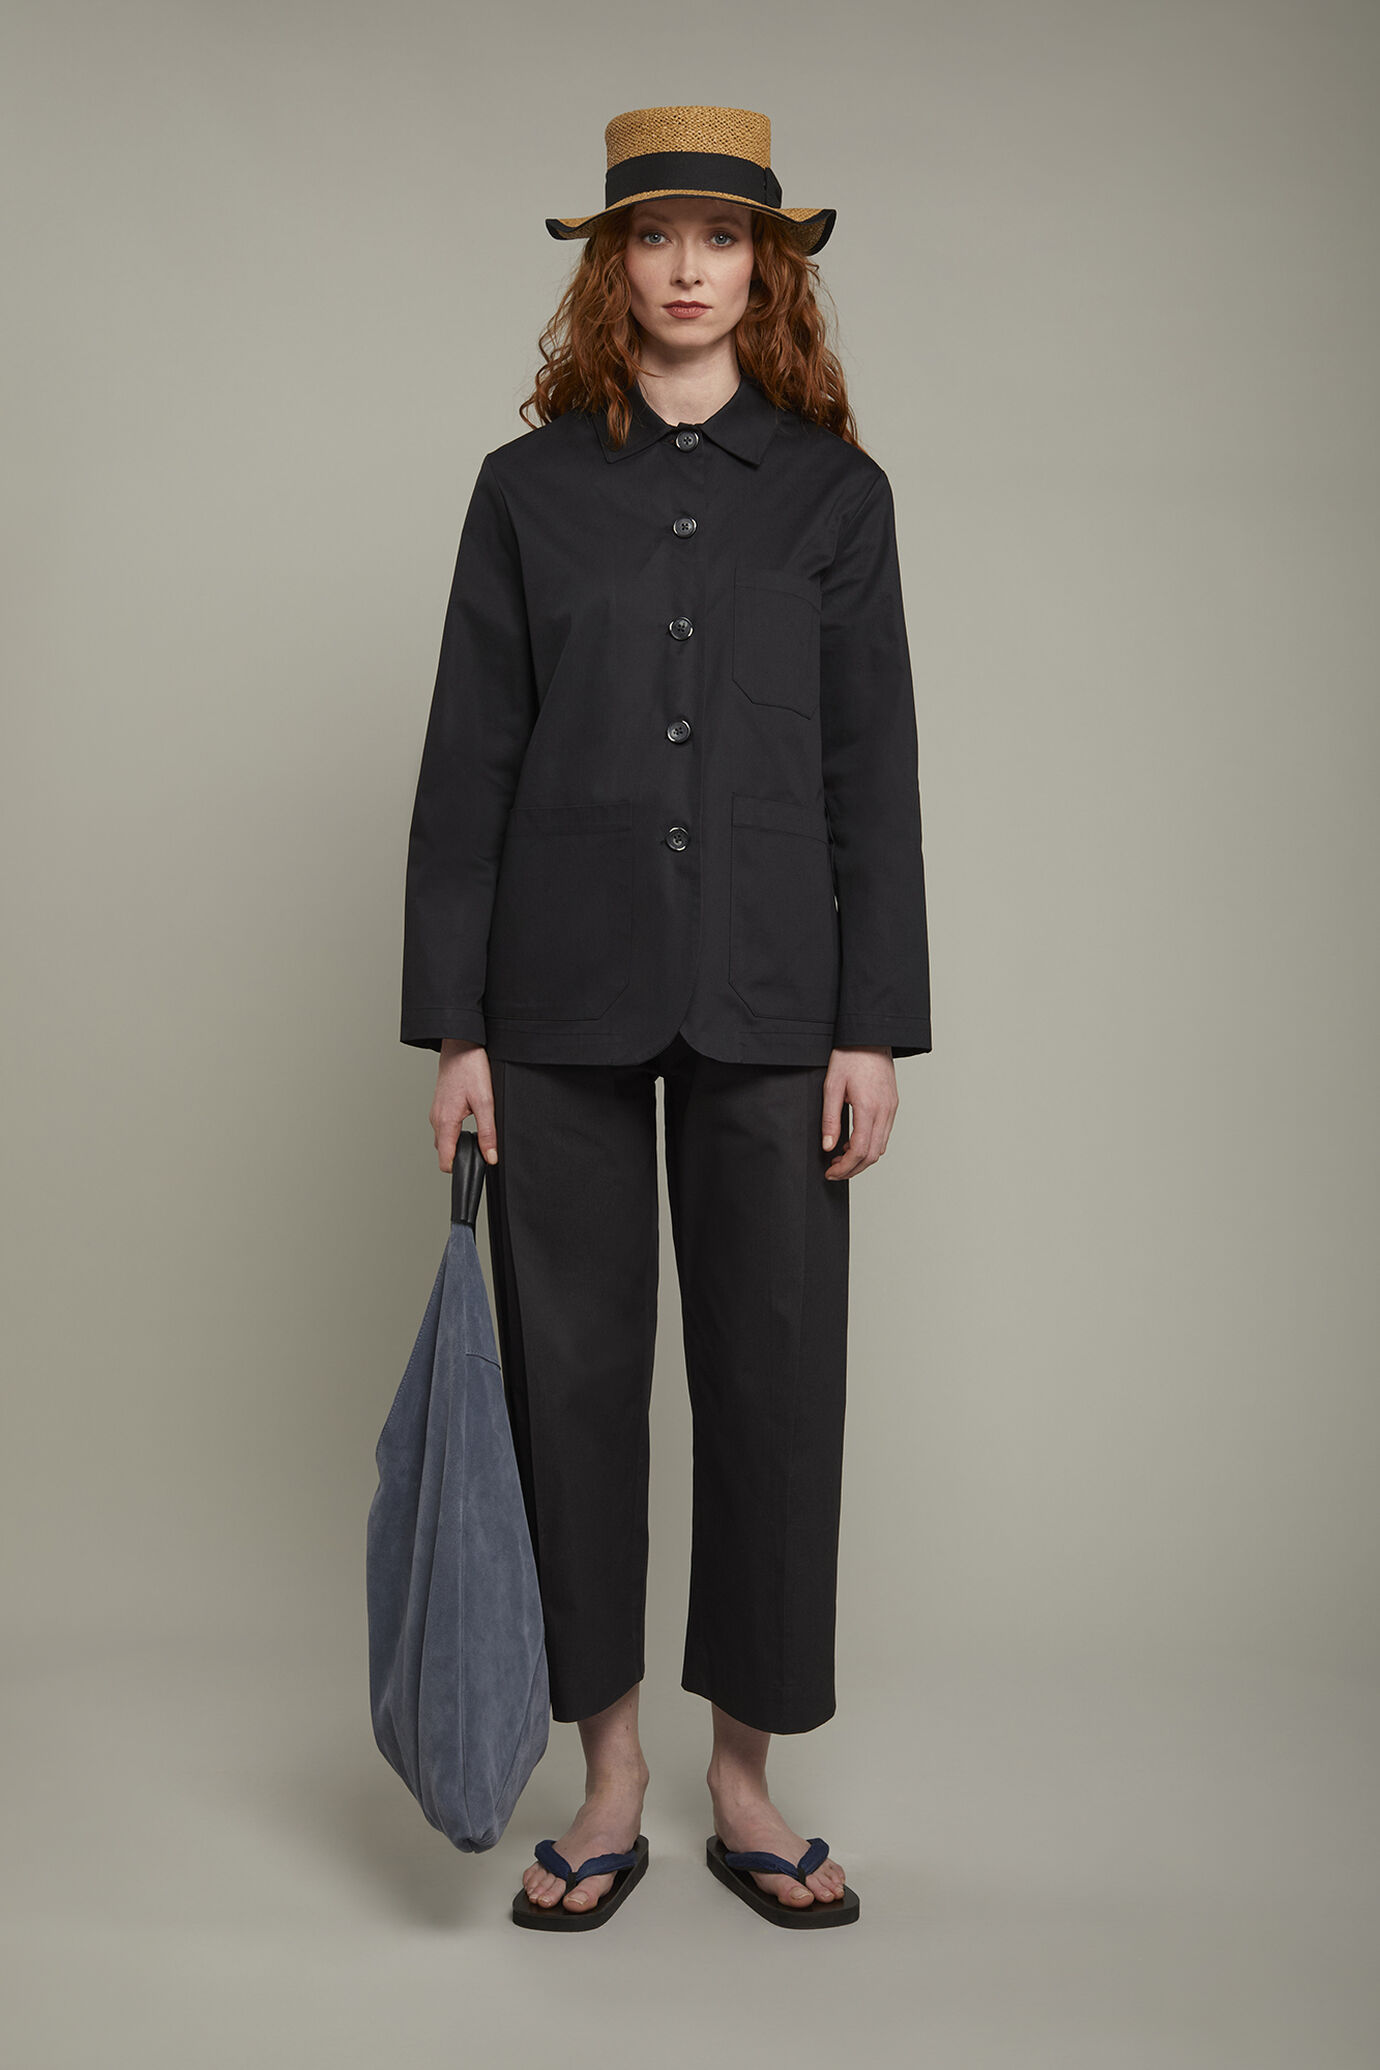 Women’s blazer 100% cotton with patch pockets regular fit